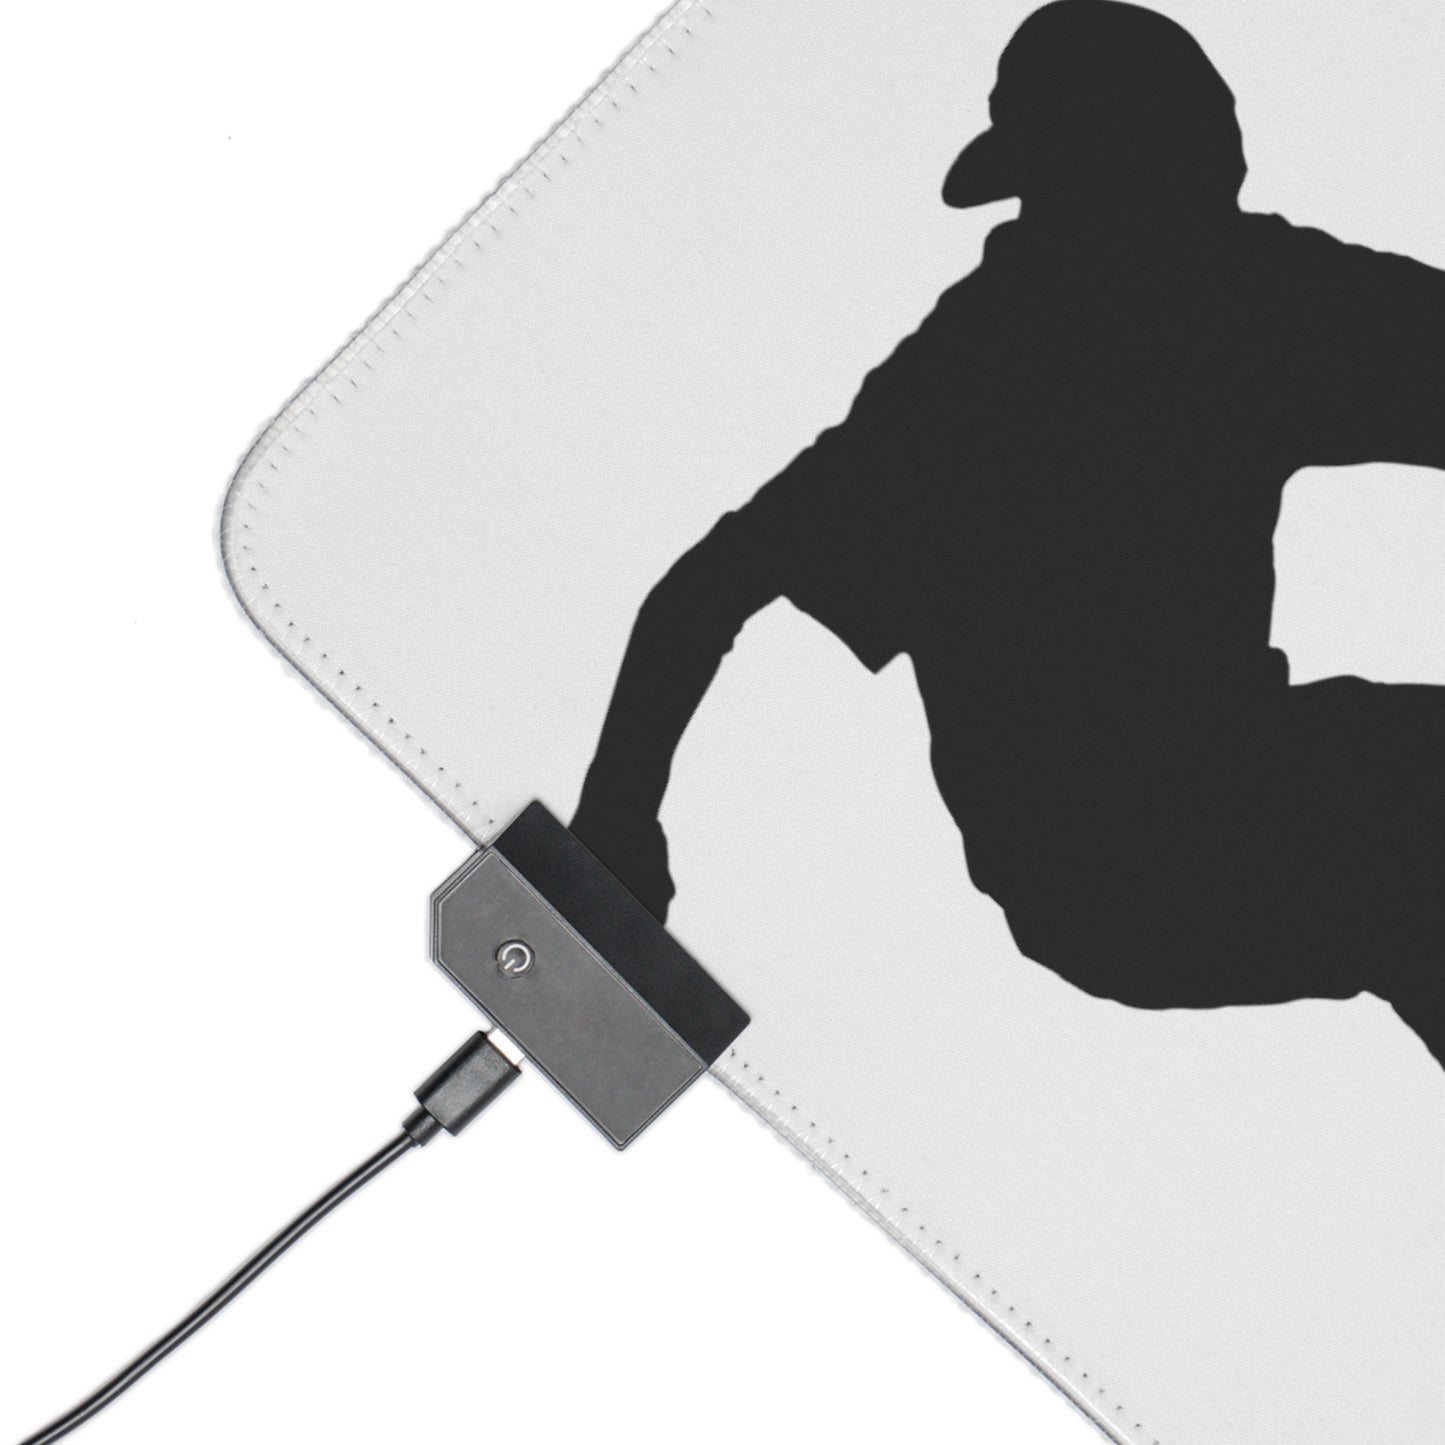 LED Gaming Mouse Pad: Skateboarding White